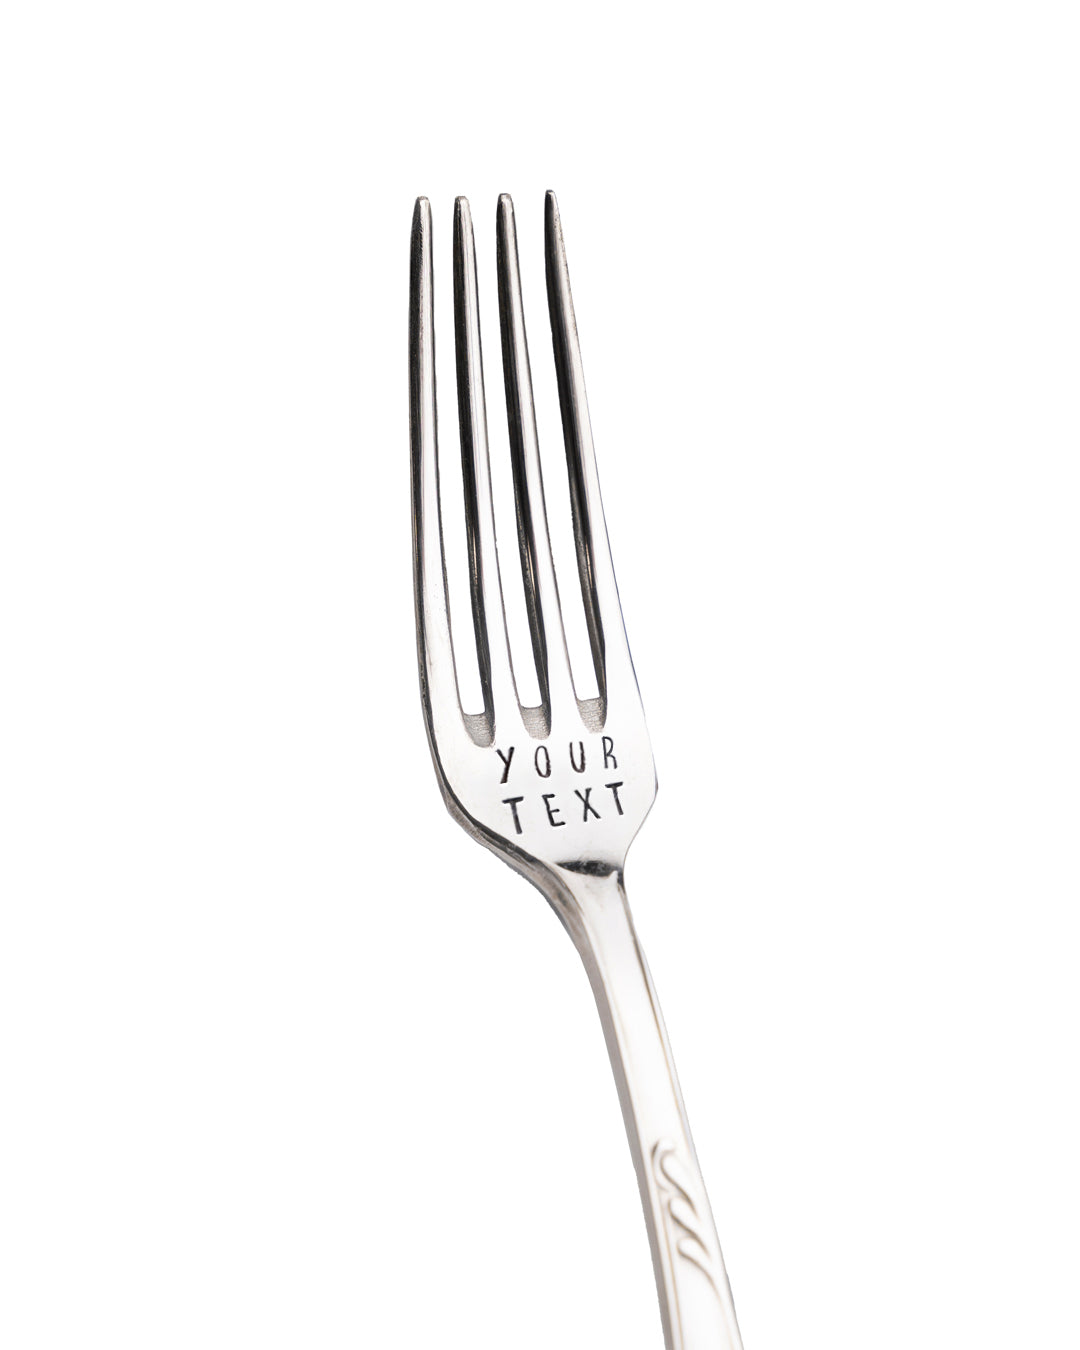 Hand-stamped vintage silver fork - custom product